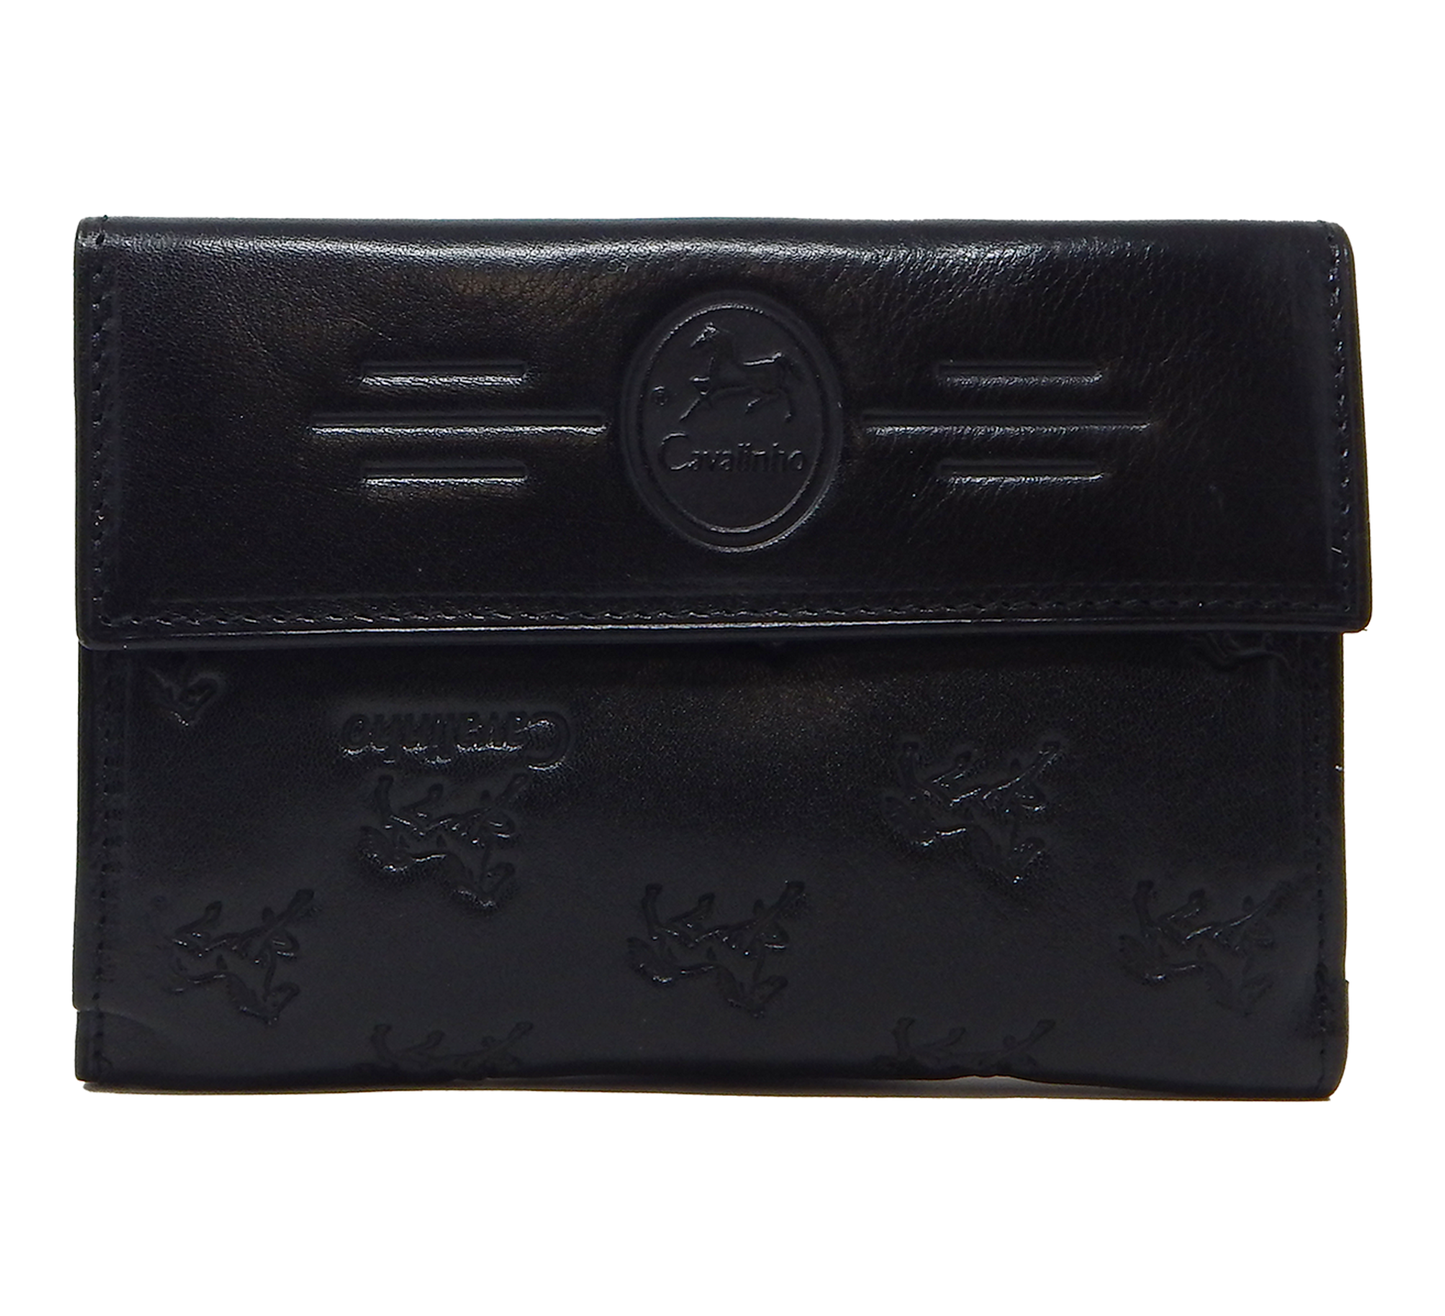 Cavalinho Cavalo Lusitano Leather Wallet - Black - 28090202_03